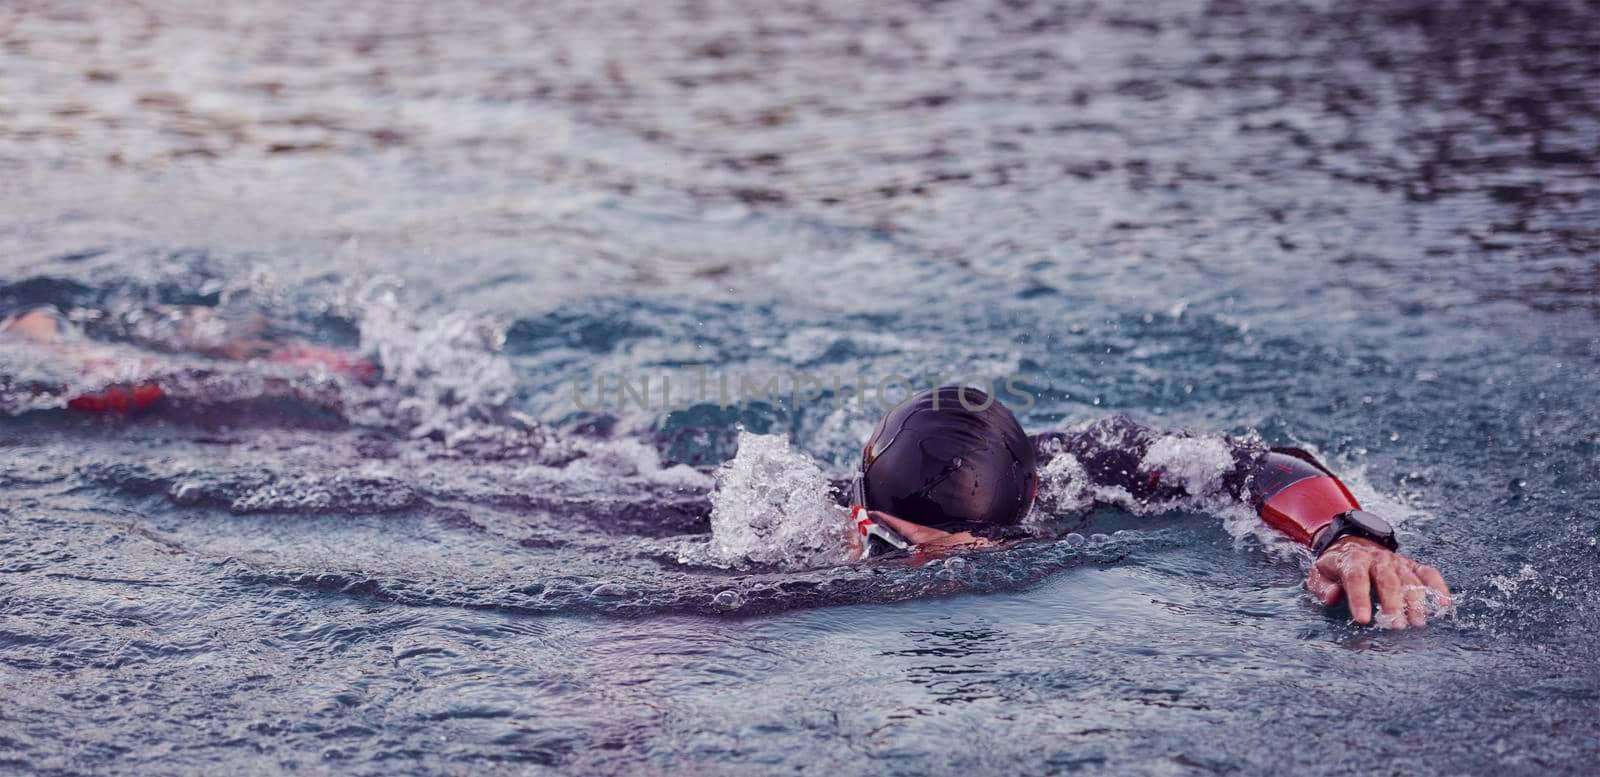 triathlon athlete swimming on lake in sunrise  wearing wetsuit by dotshock